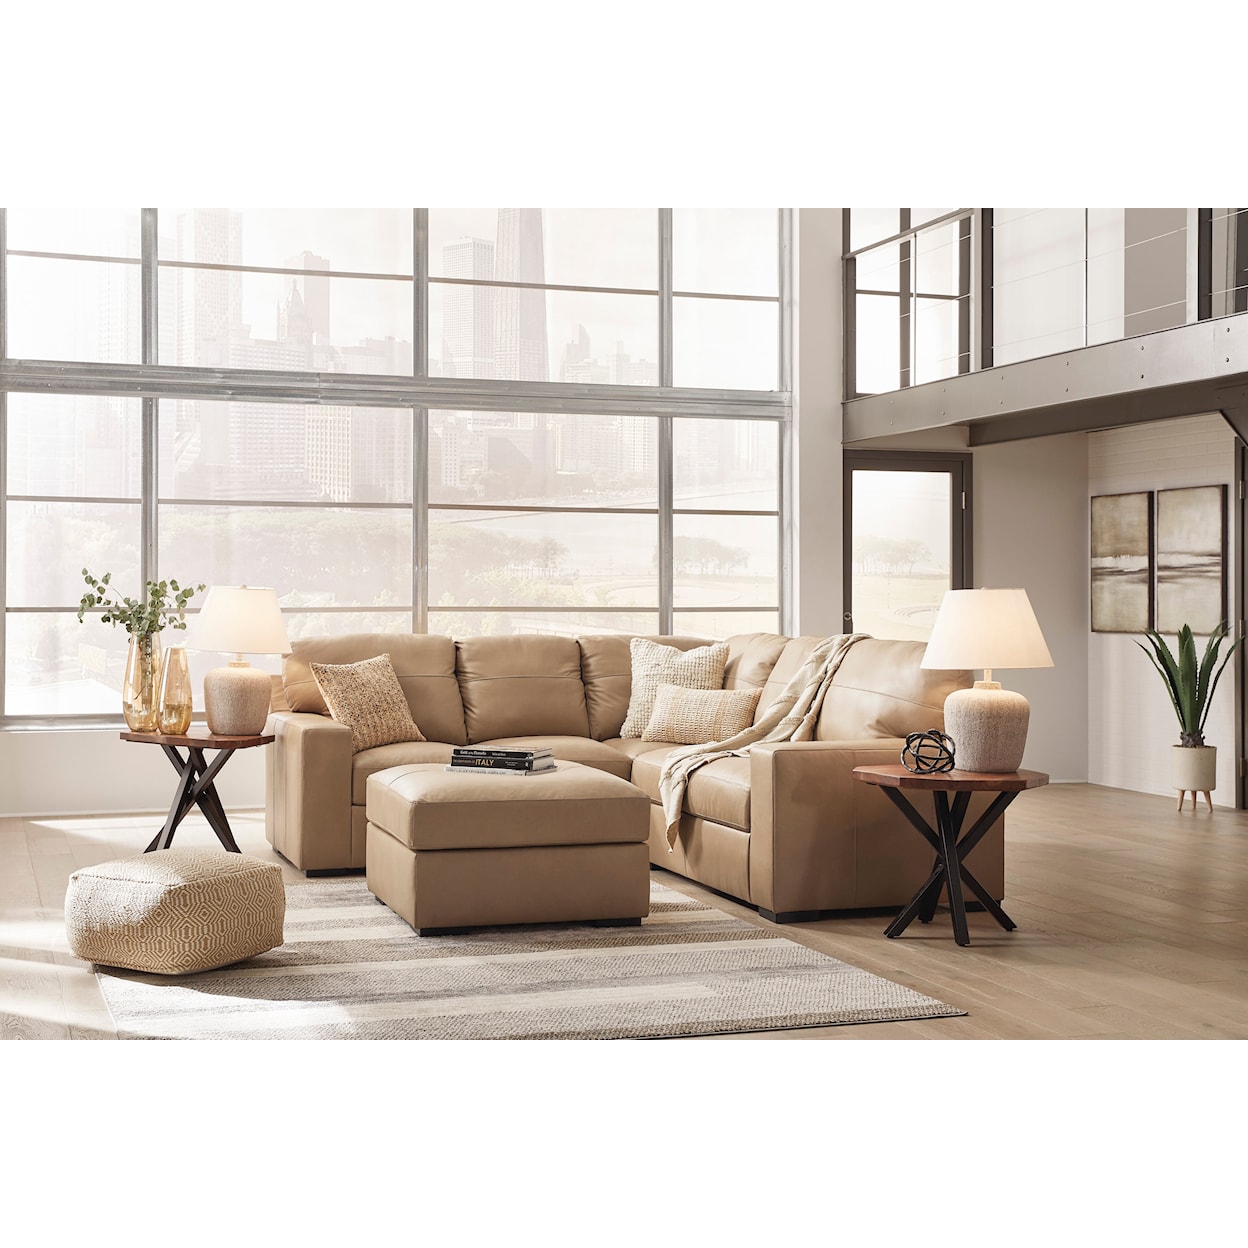 Ashley Furniture Signature Design Bandon Living Room Set